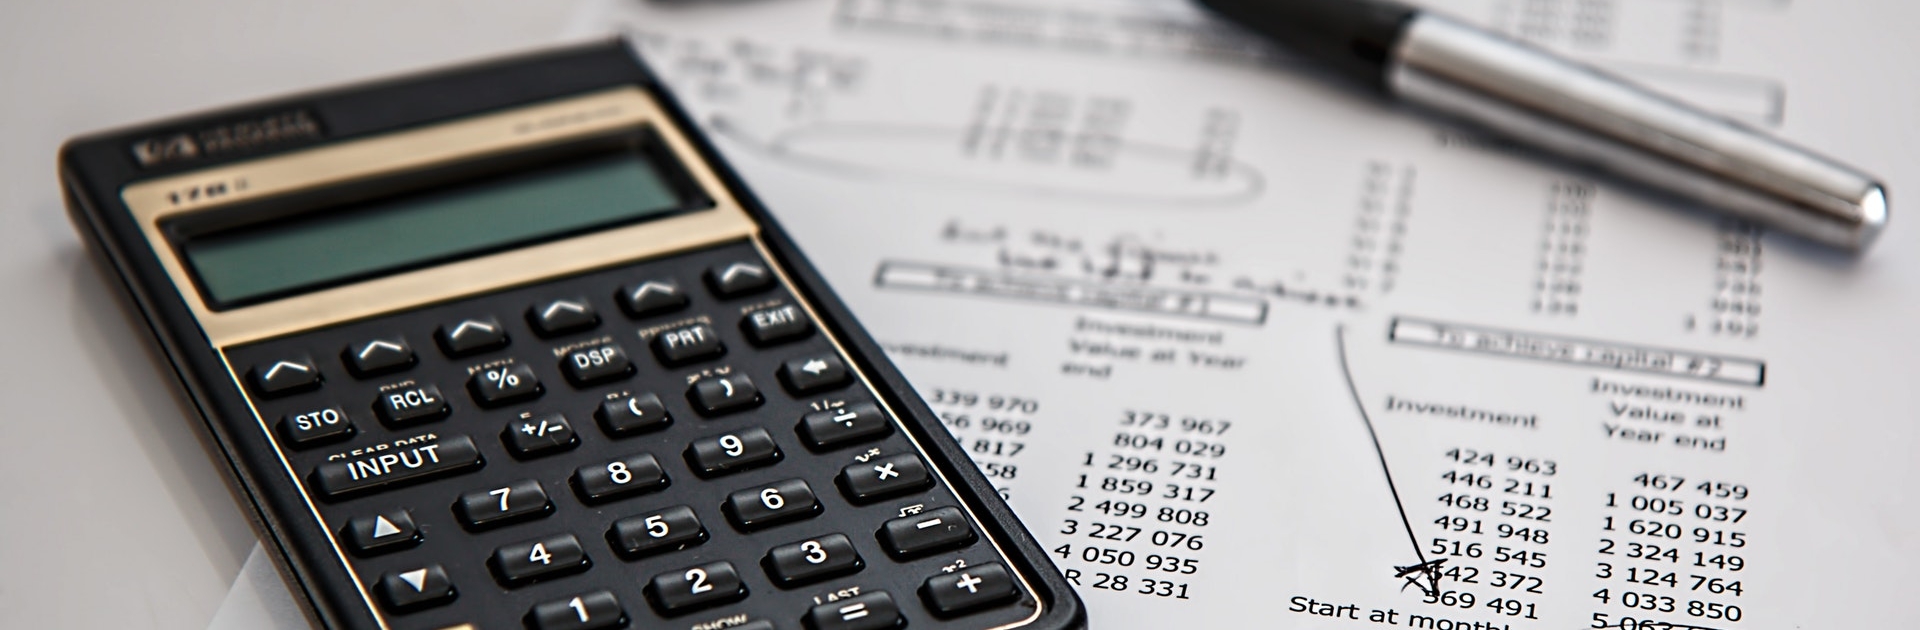 calculator and finance